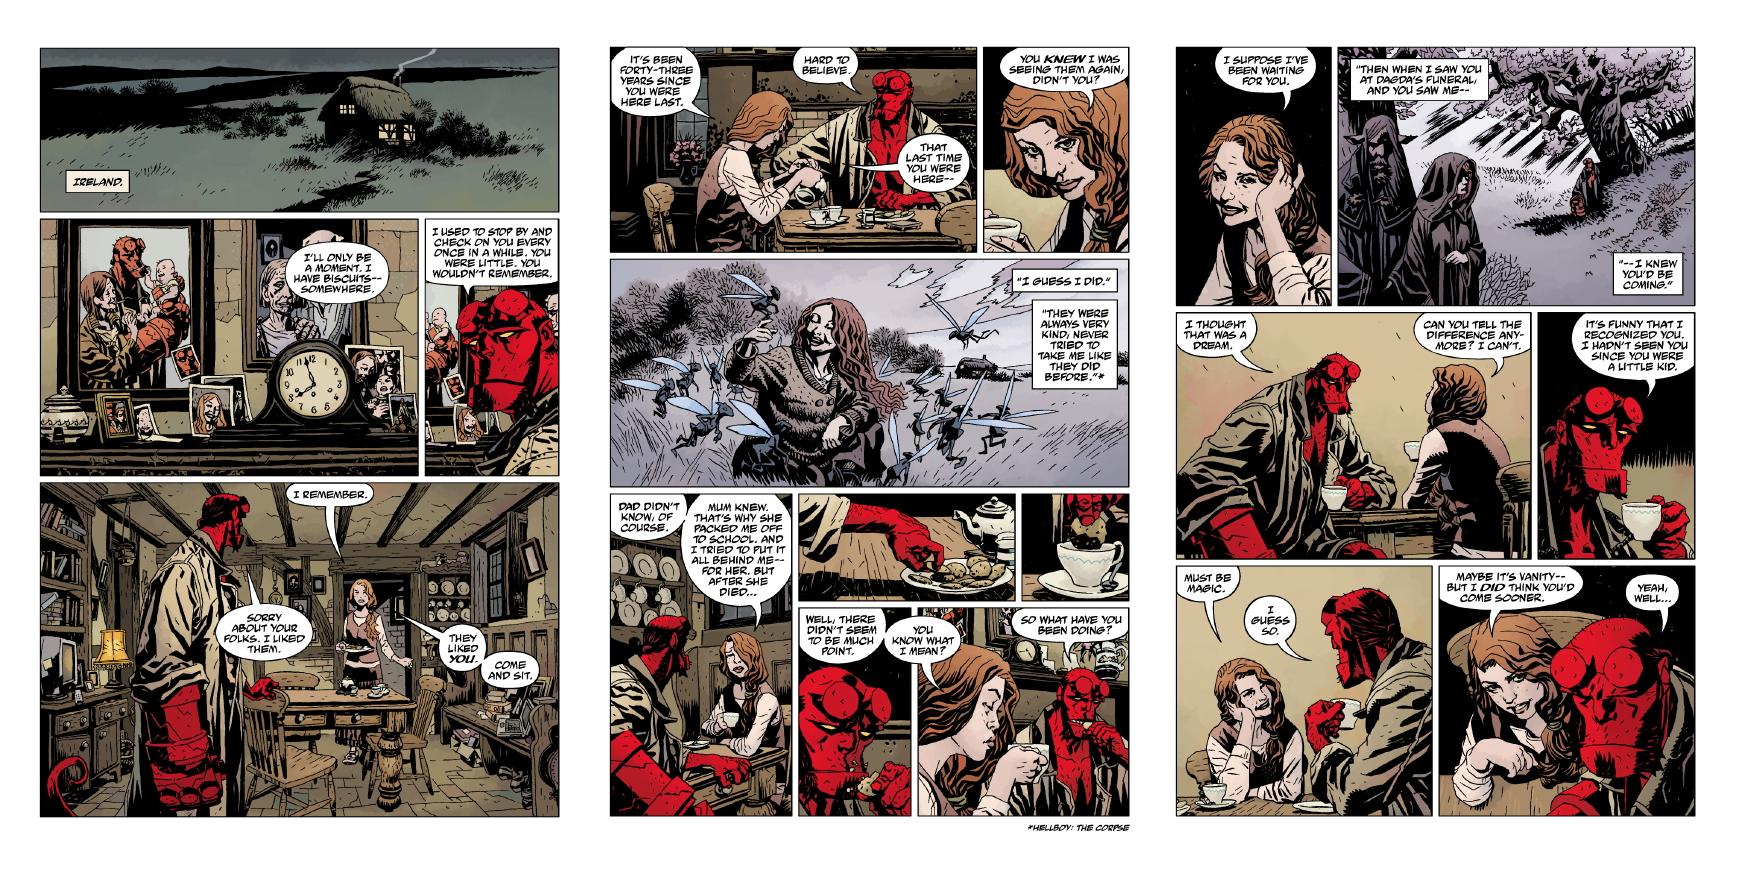 Hellboy: The Wild Hunt #8